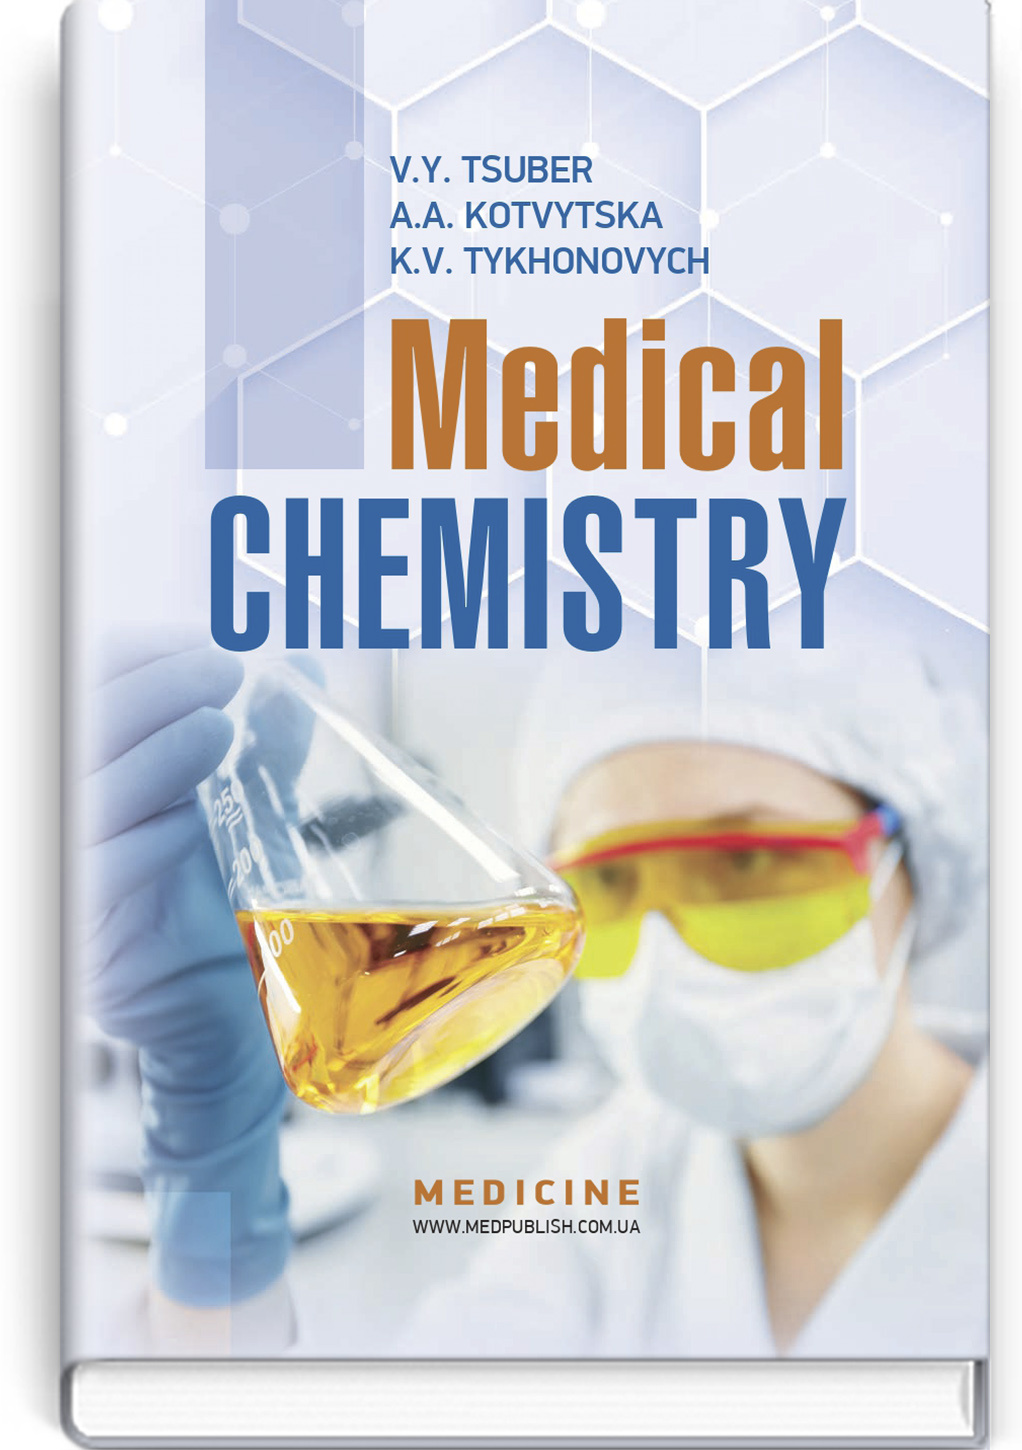 Medical Chemistry: textbook